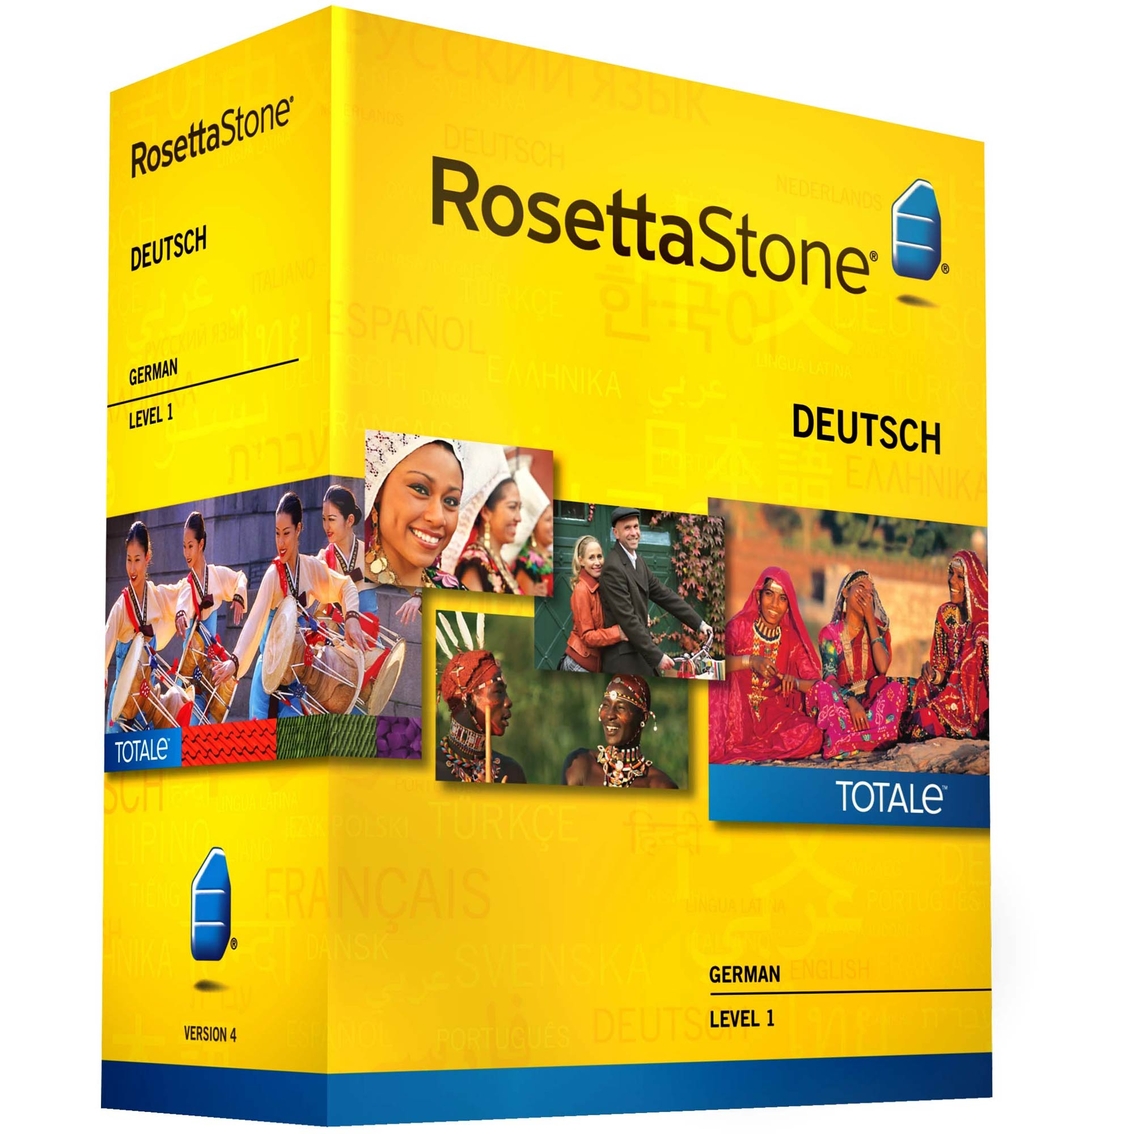 Rosetta Stone Version 4 Totale German Level 1 Language Software Electronics Shop The Exchange